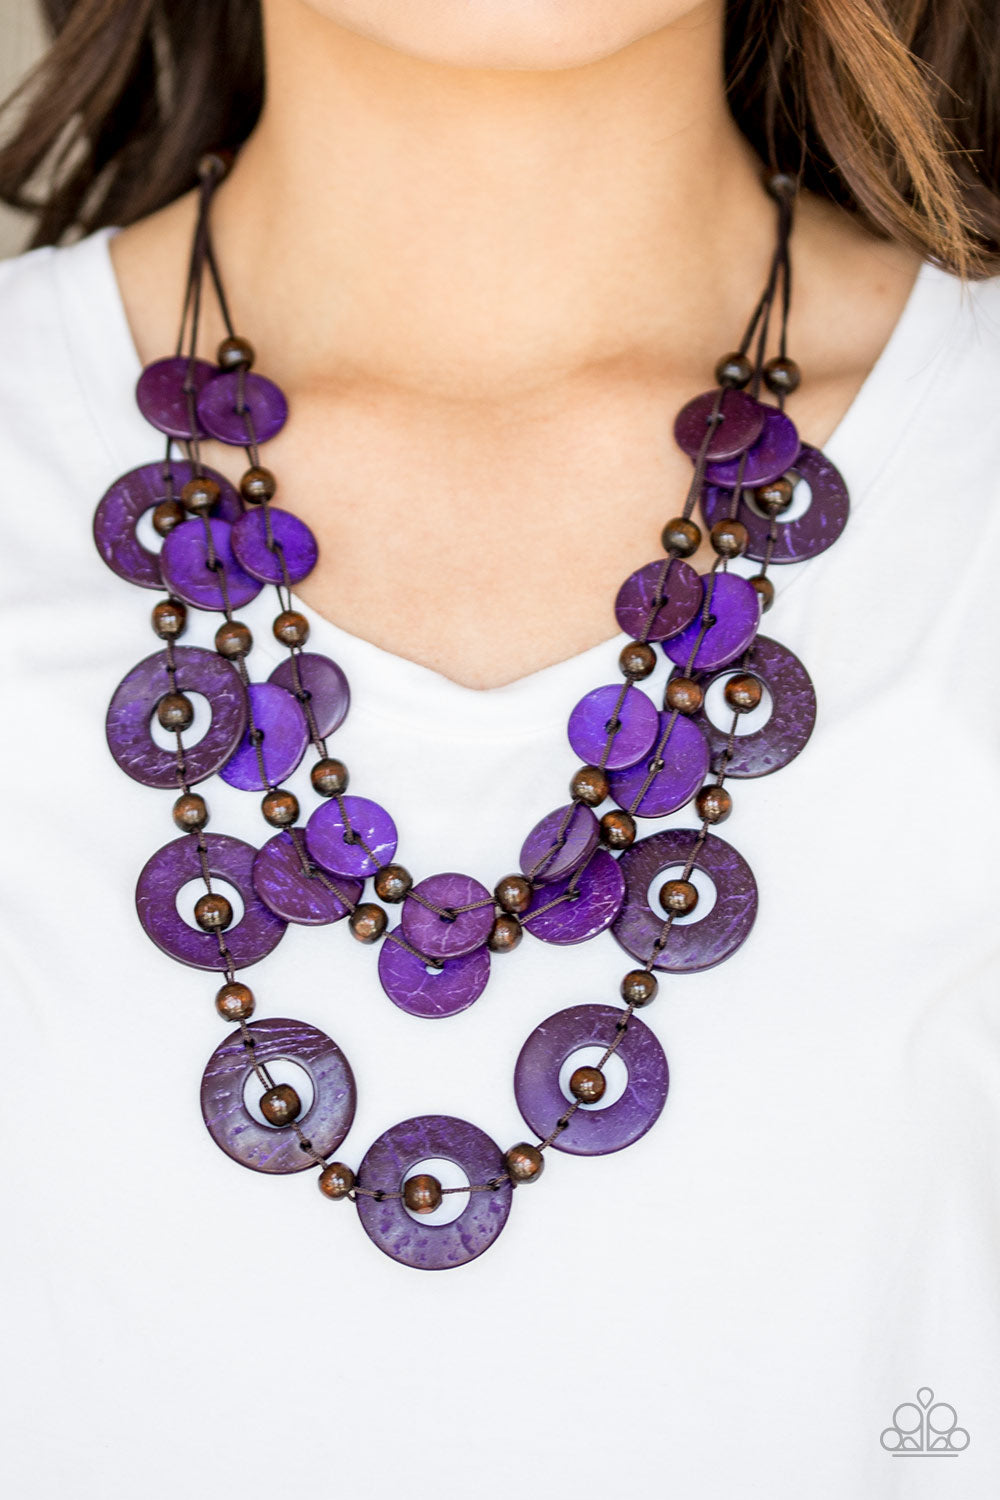 Catalina Coastin - Purple wood necklace